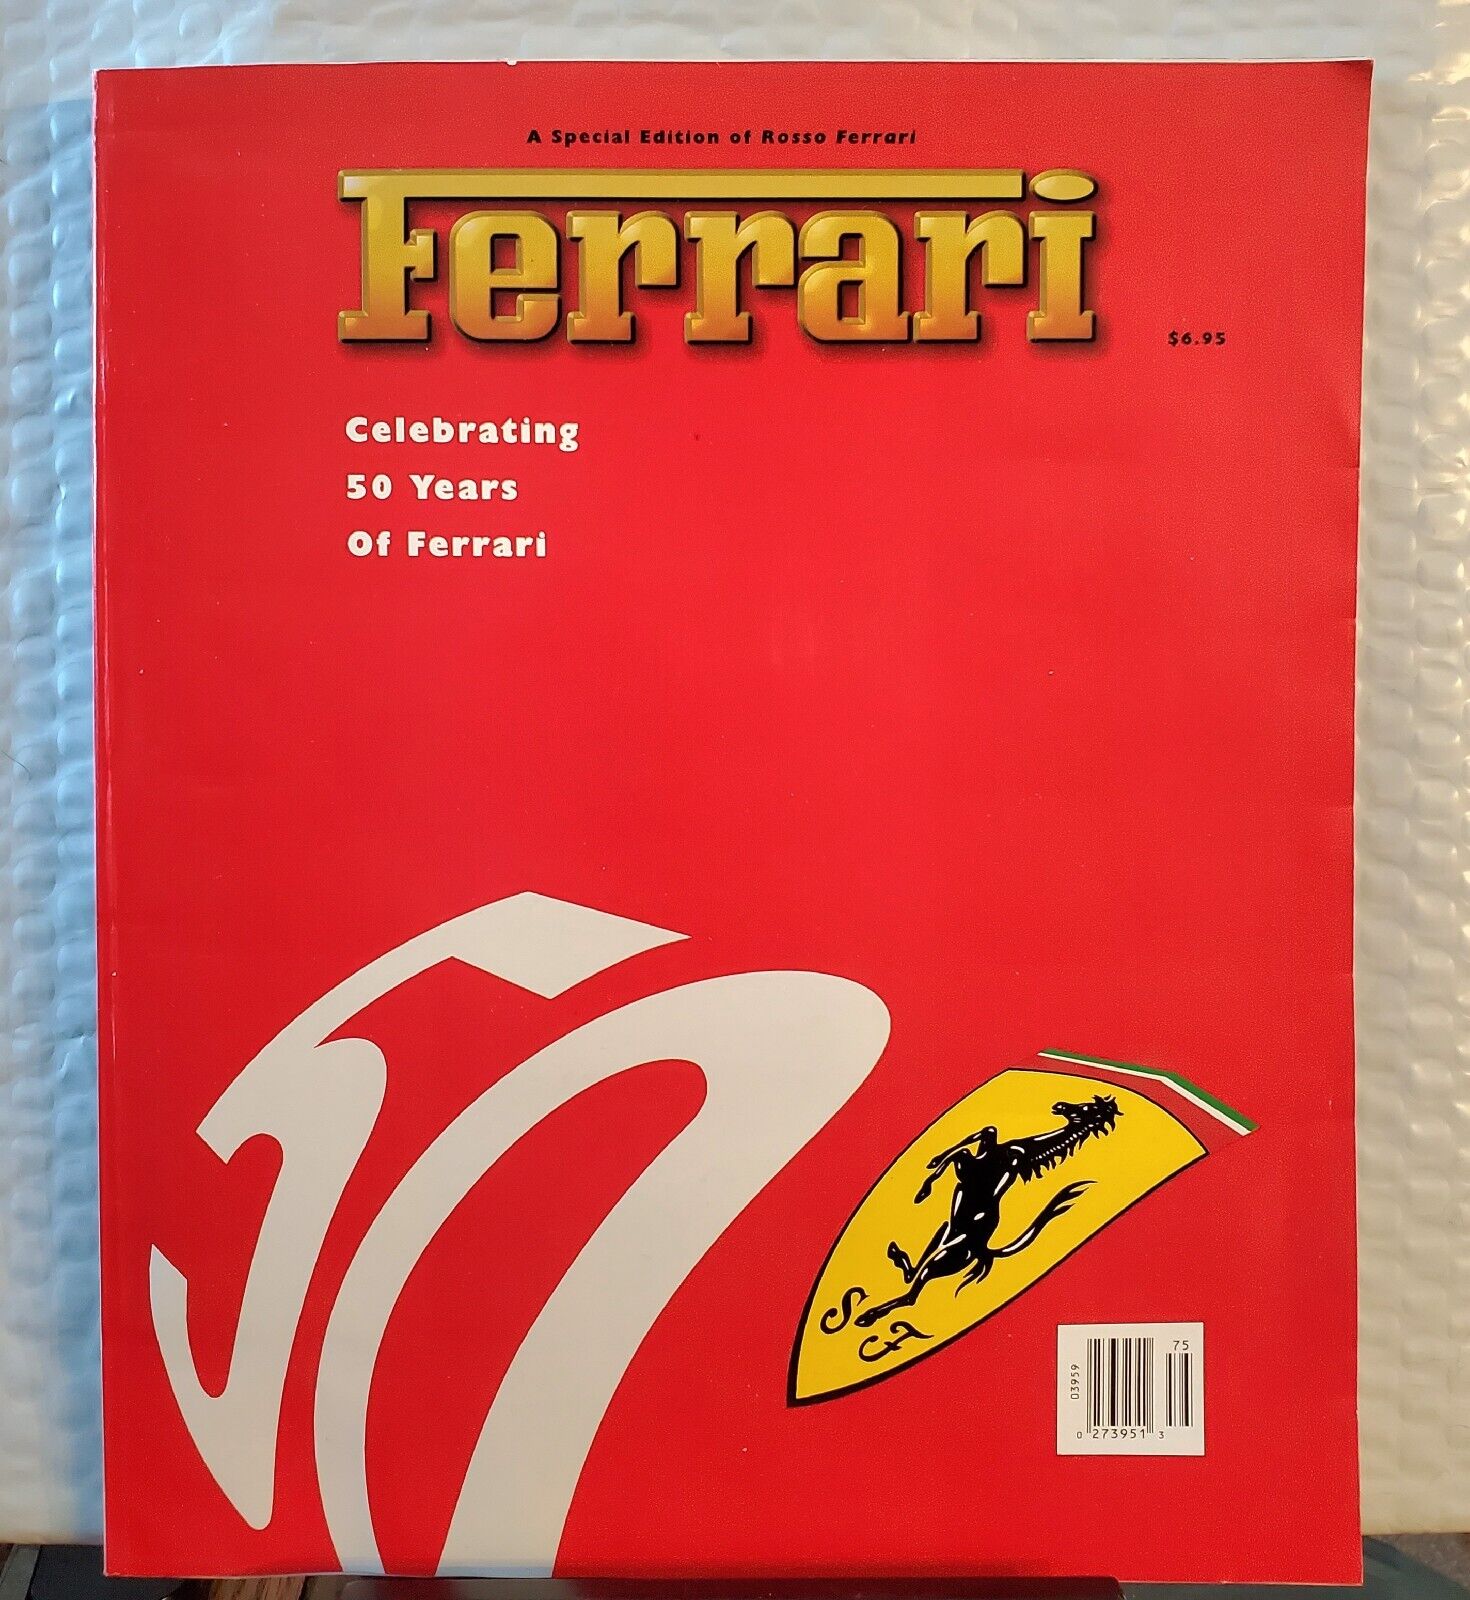 1997 Rosso Ferrari Celebrating 50 Years Anniversary 112pg. Special Ed. Magazine 